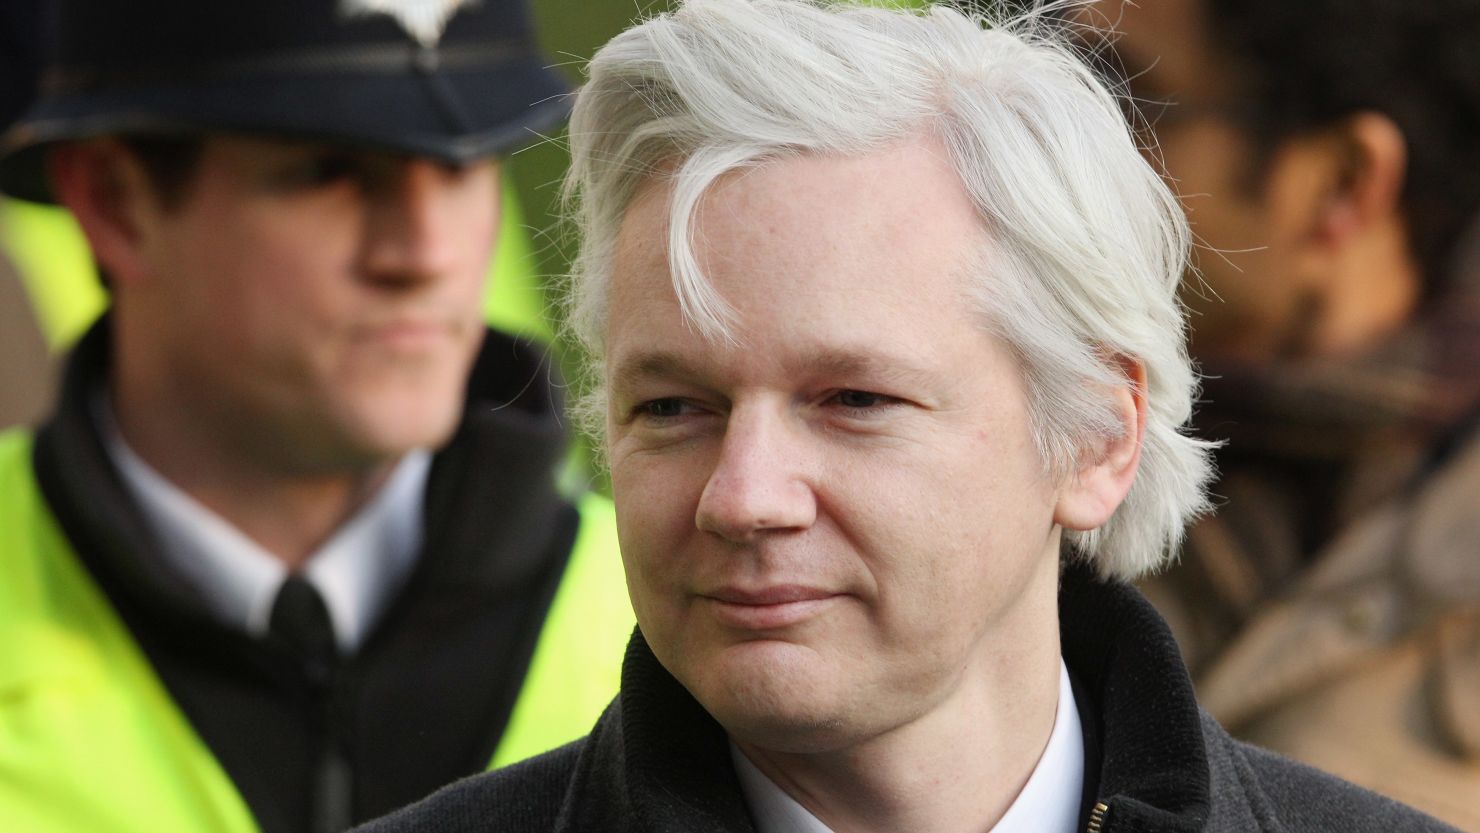 Julian Assange, seen here on February 1, 2012, will remain inside the Ecuadorian Embassy in London.